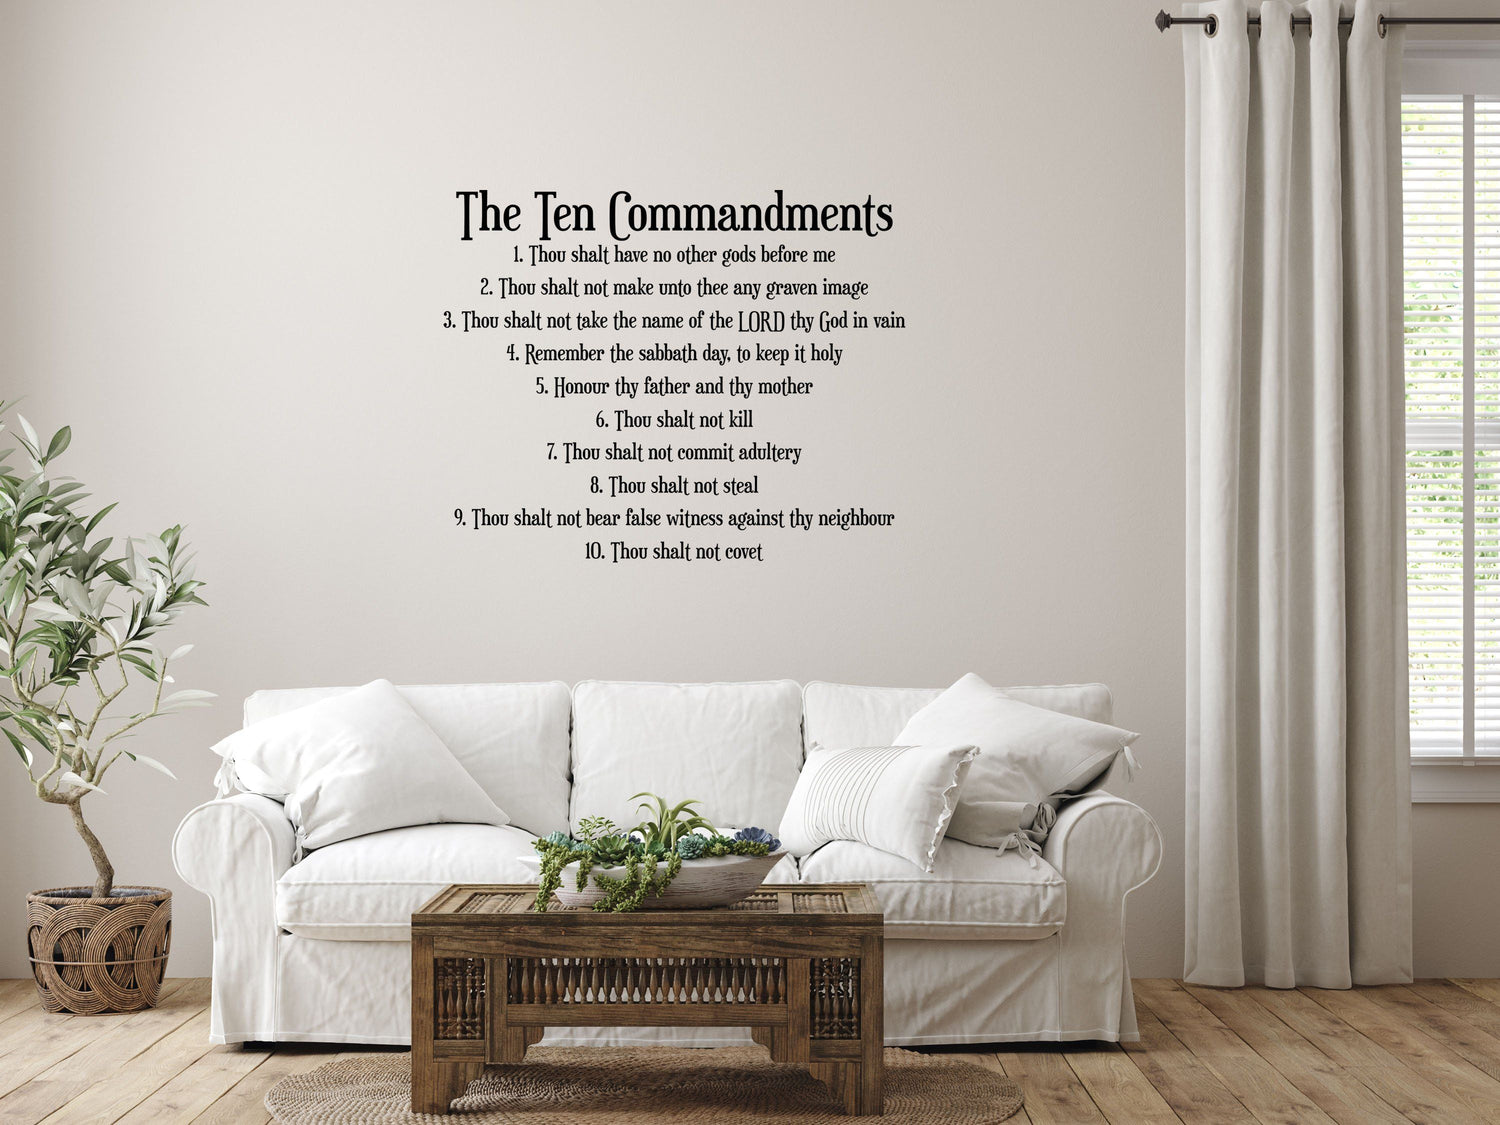 The 10 Commandments - Scripture Wall Decals Vinyl Wall Decal Inspirational Wall Signs 